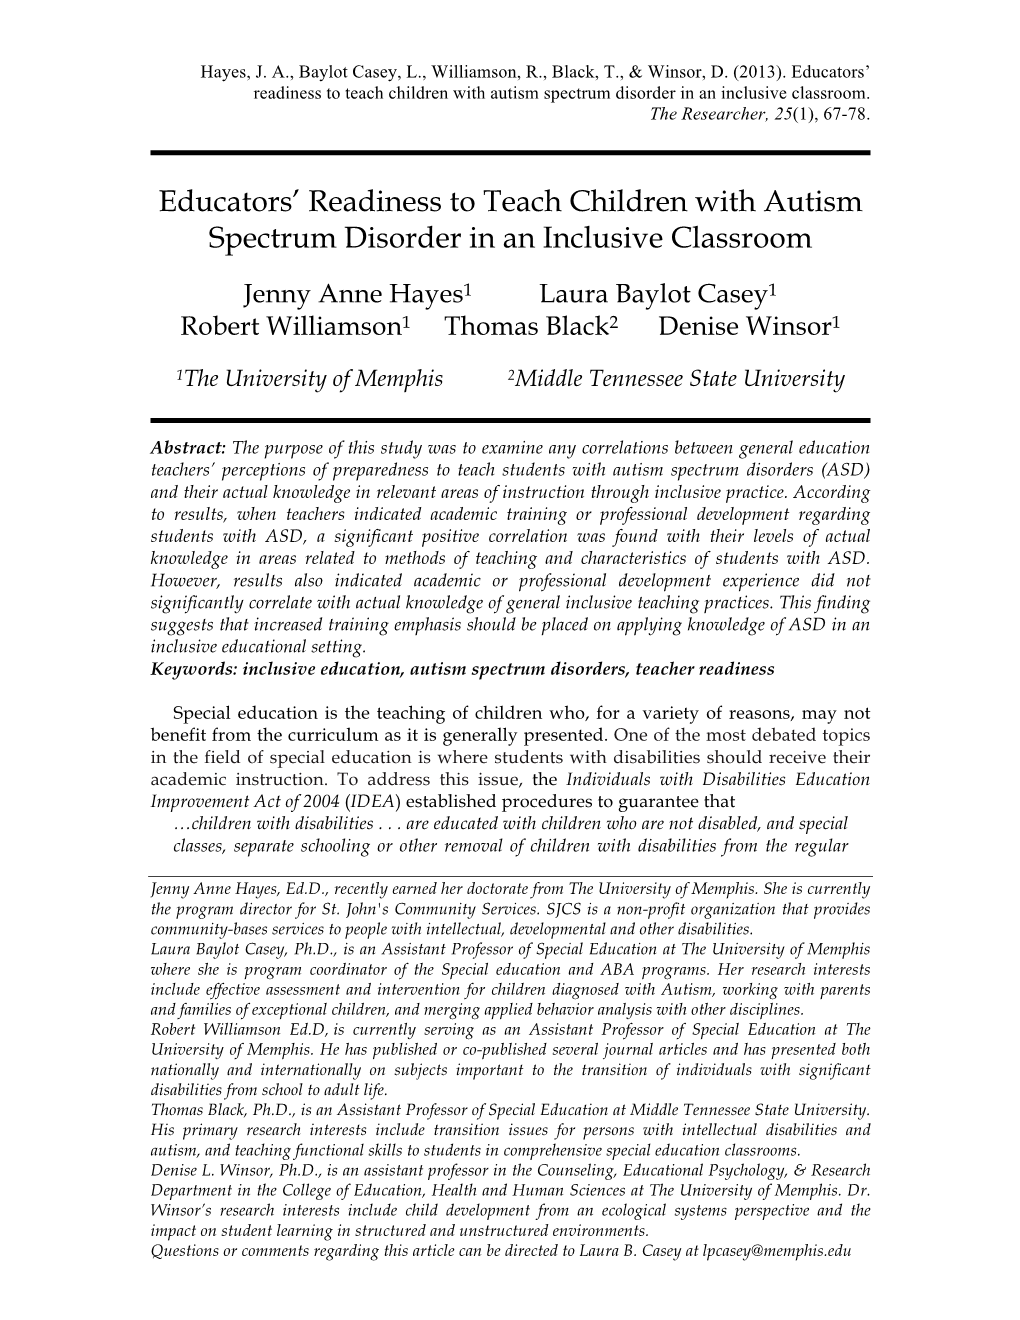 Educators' Readiness to Teach Children with Autism Spectrum